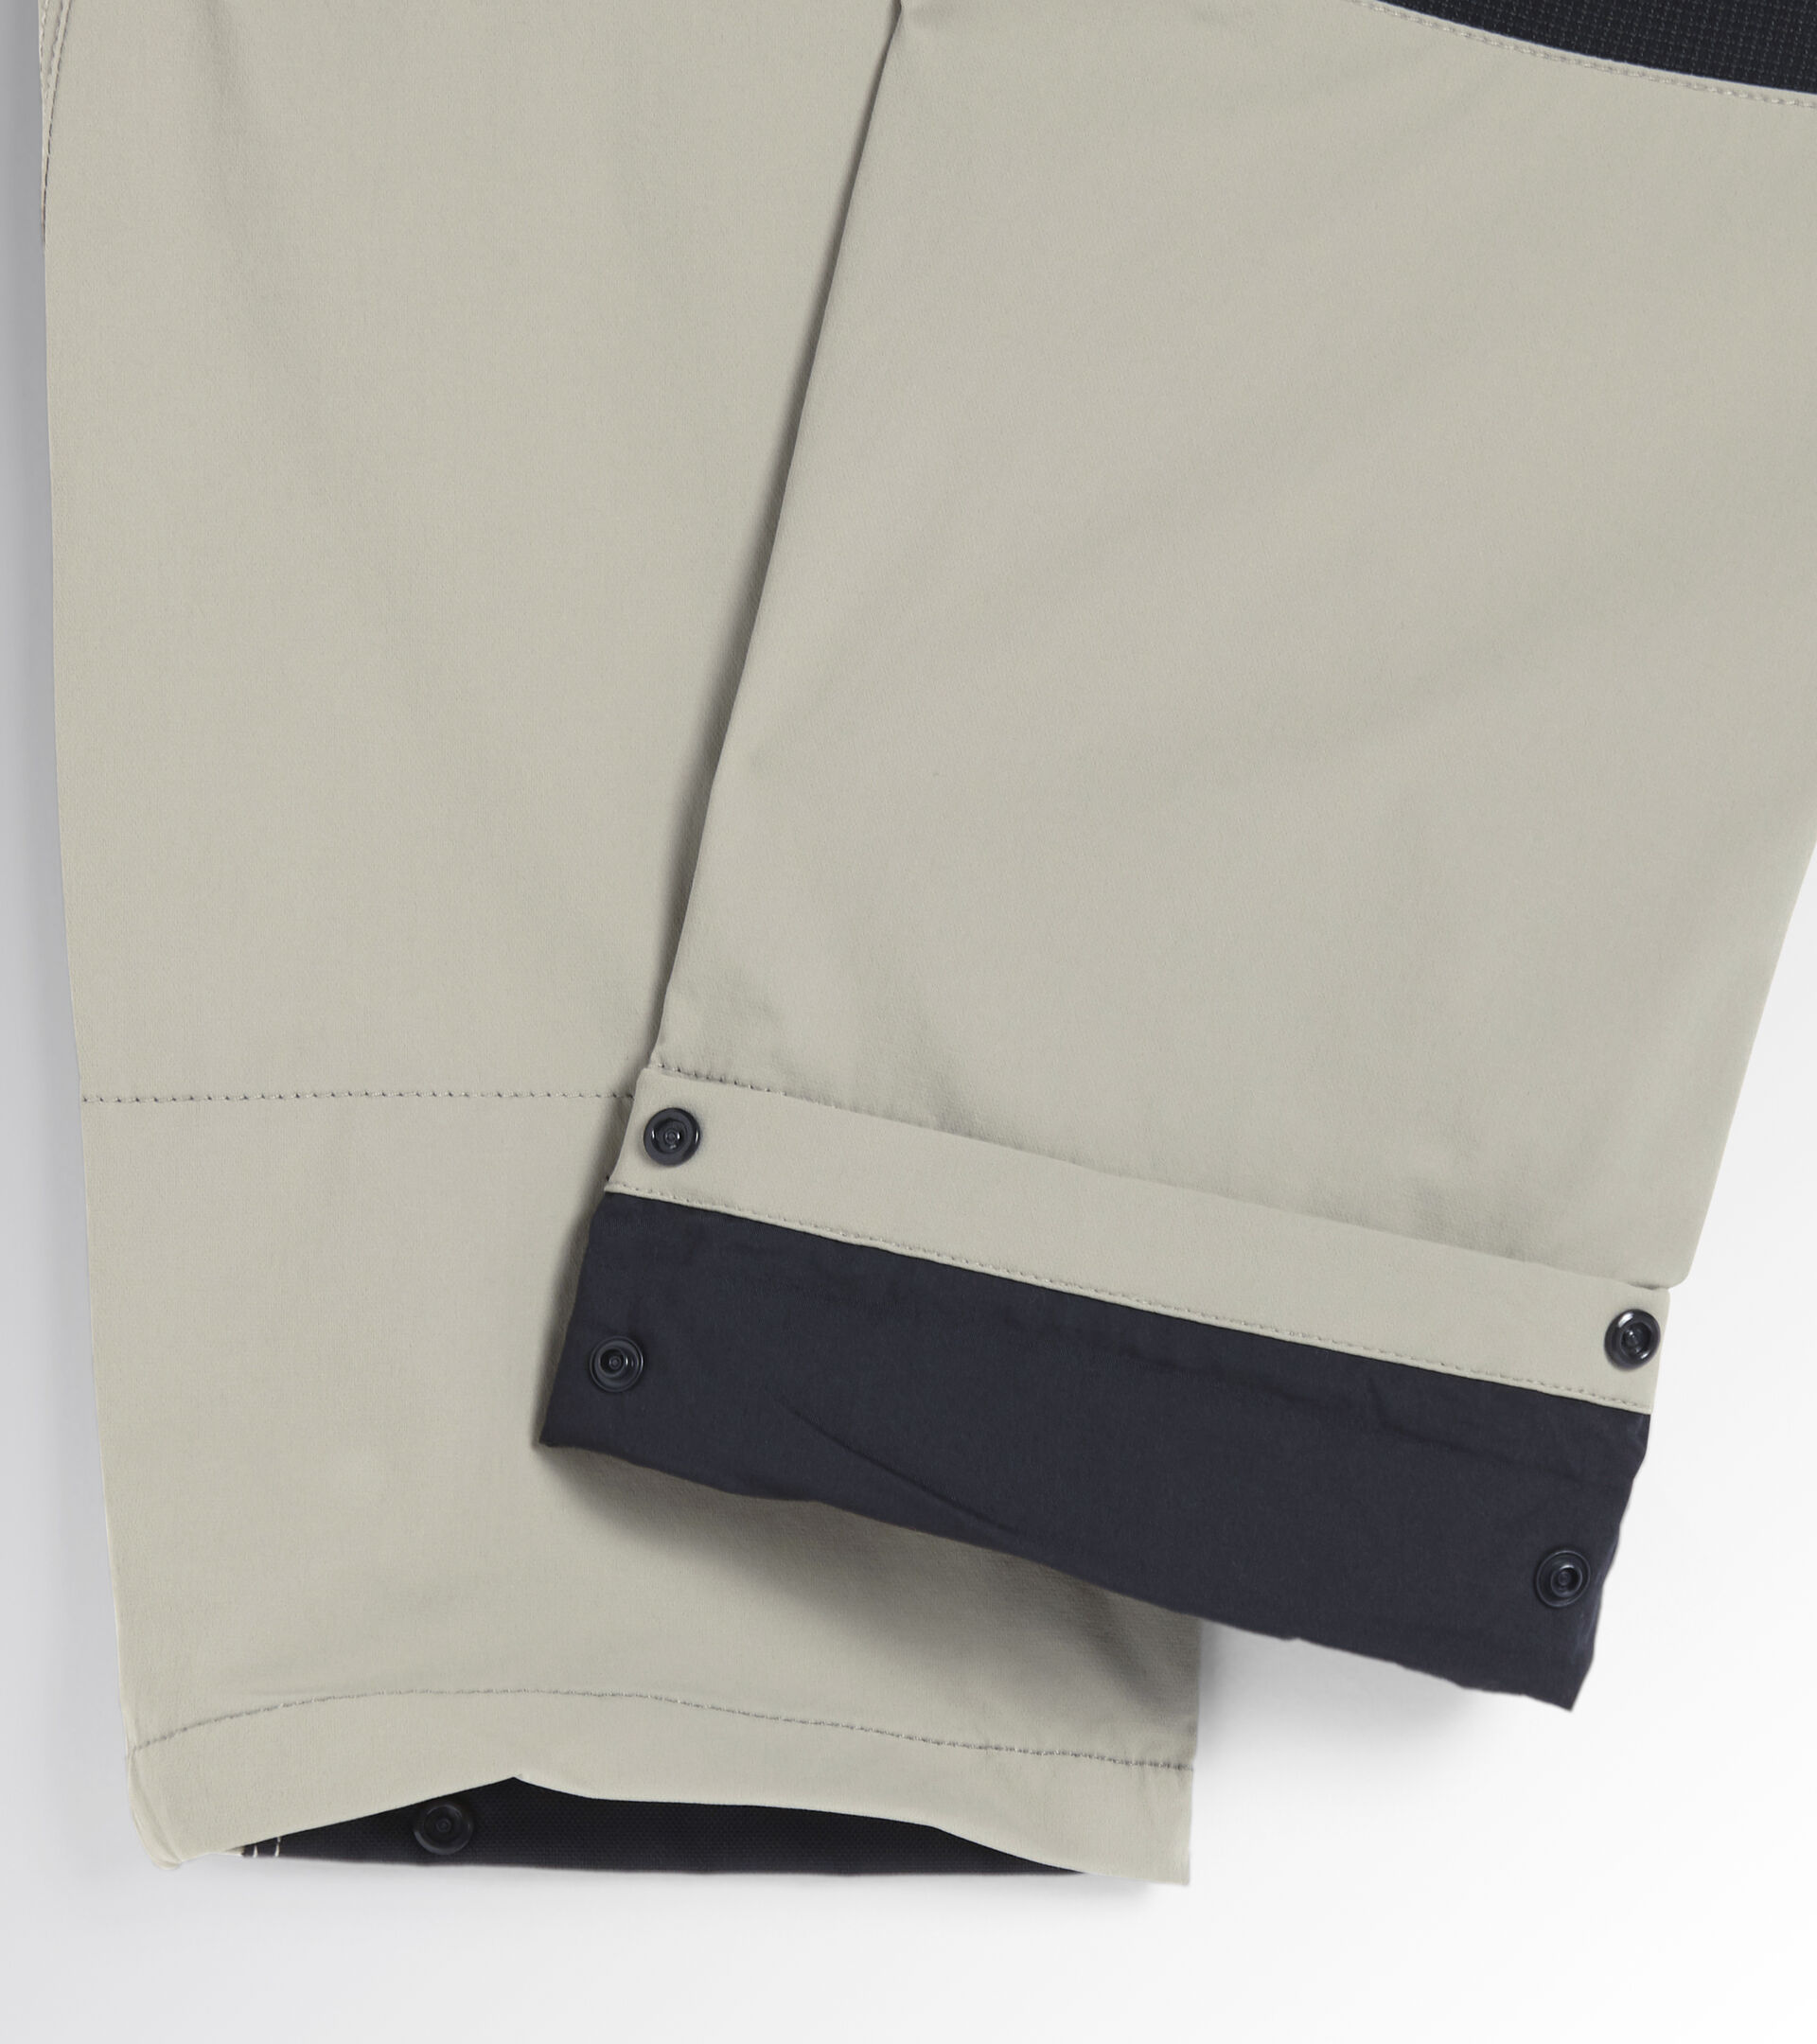 Work trousers PANT TECH PERFORMANCE GREY HEMP - Utility